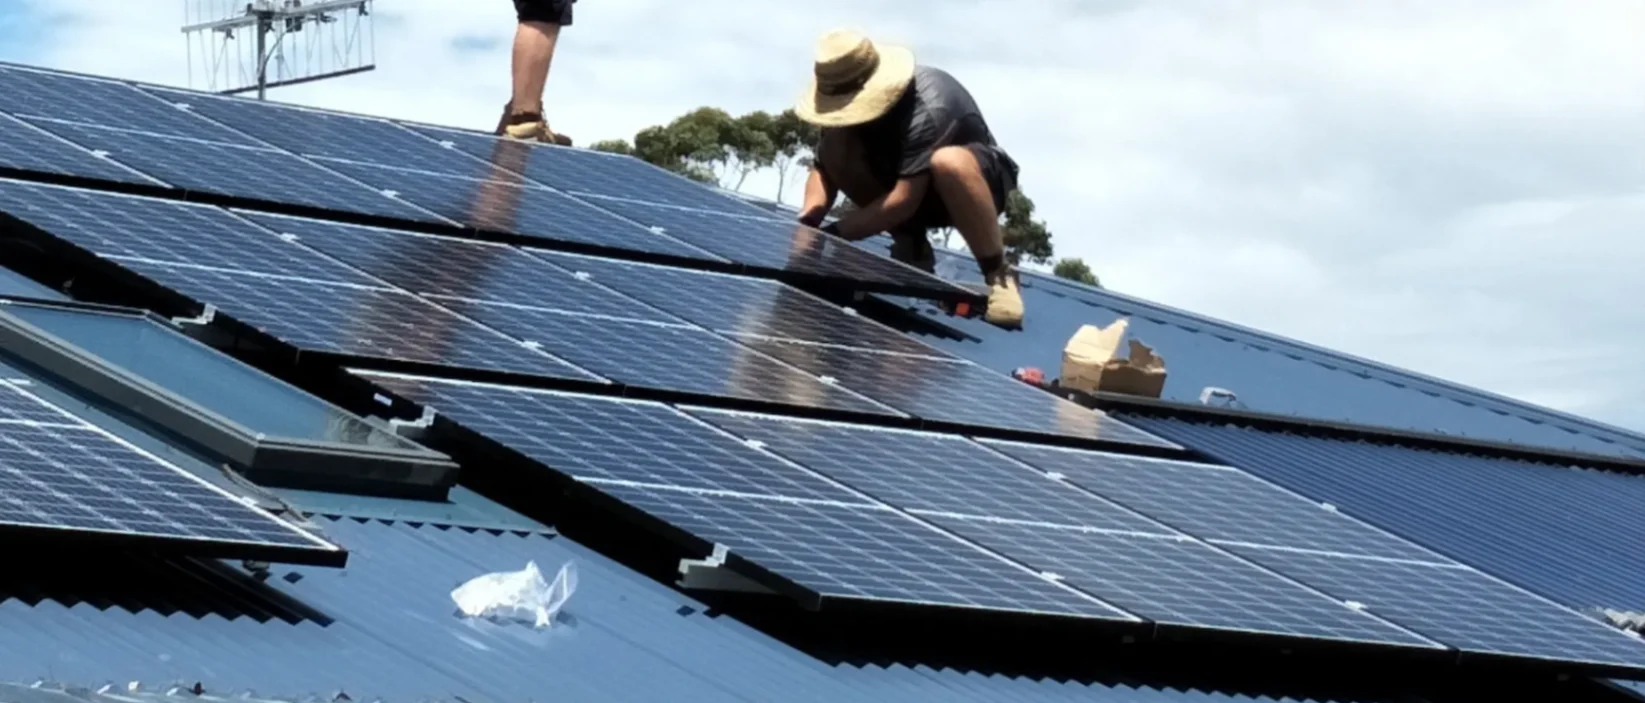 technician on roof working on solar panels